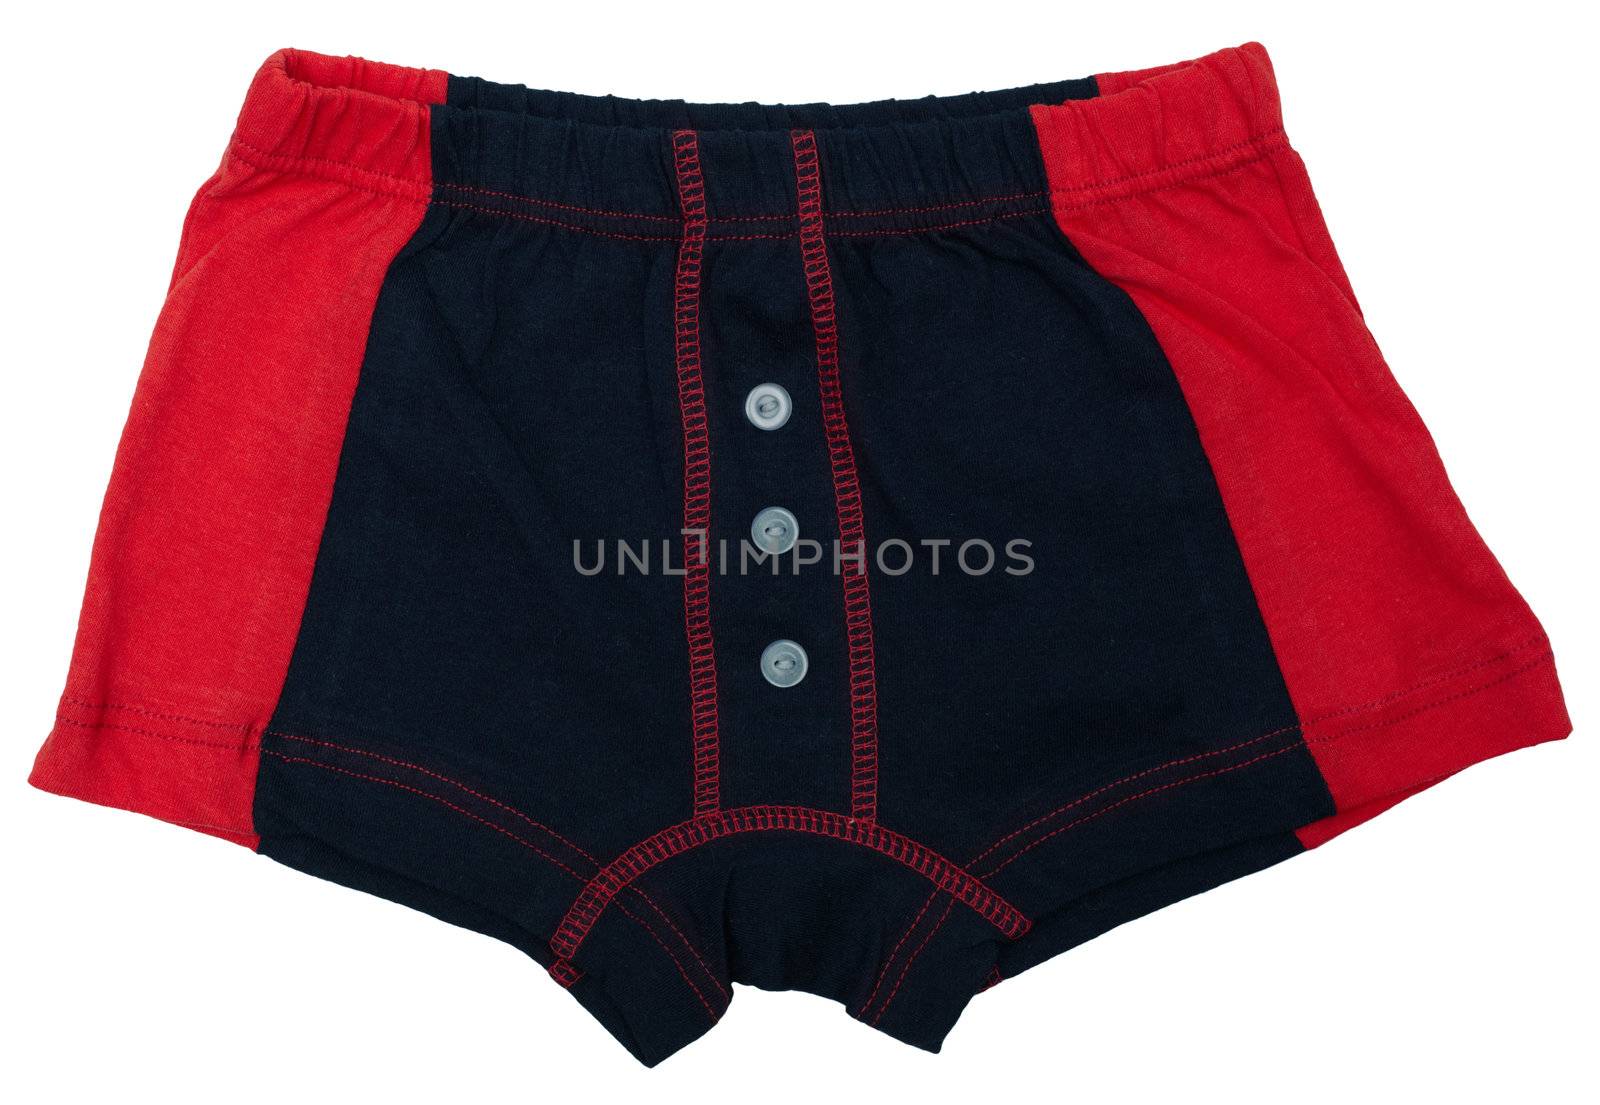 Children's underwear - black and red by pzaxe